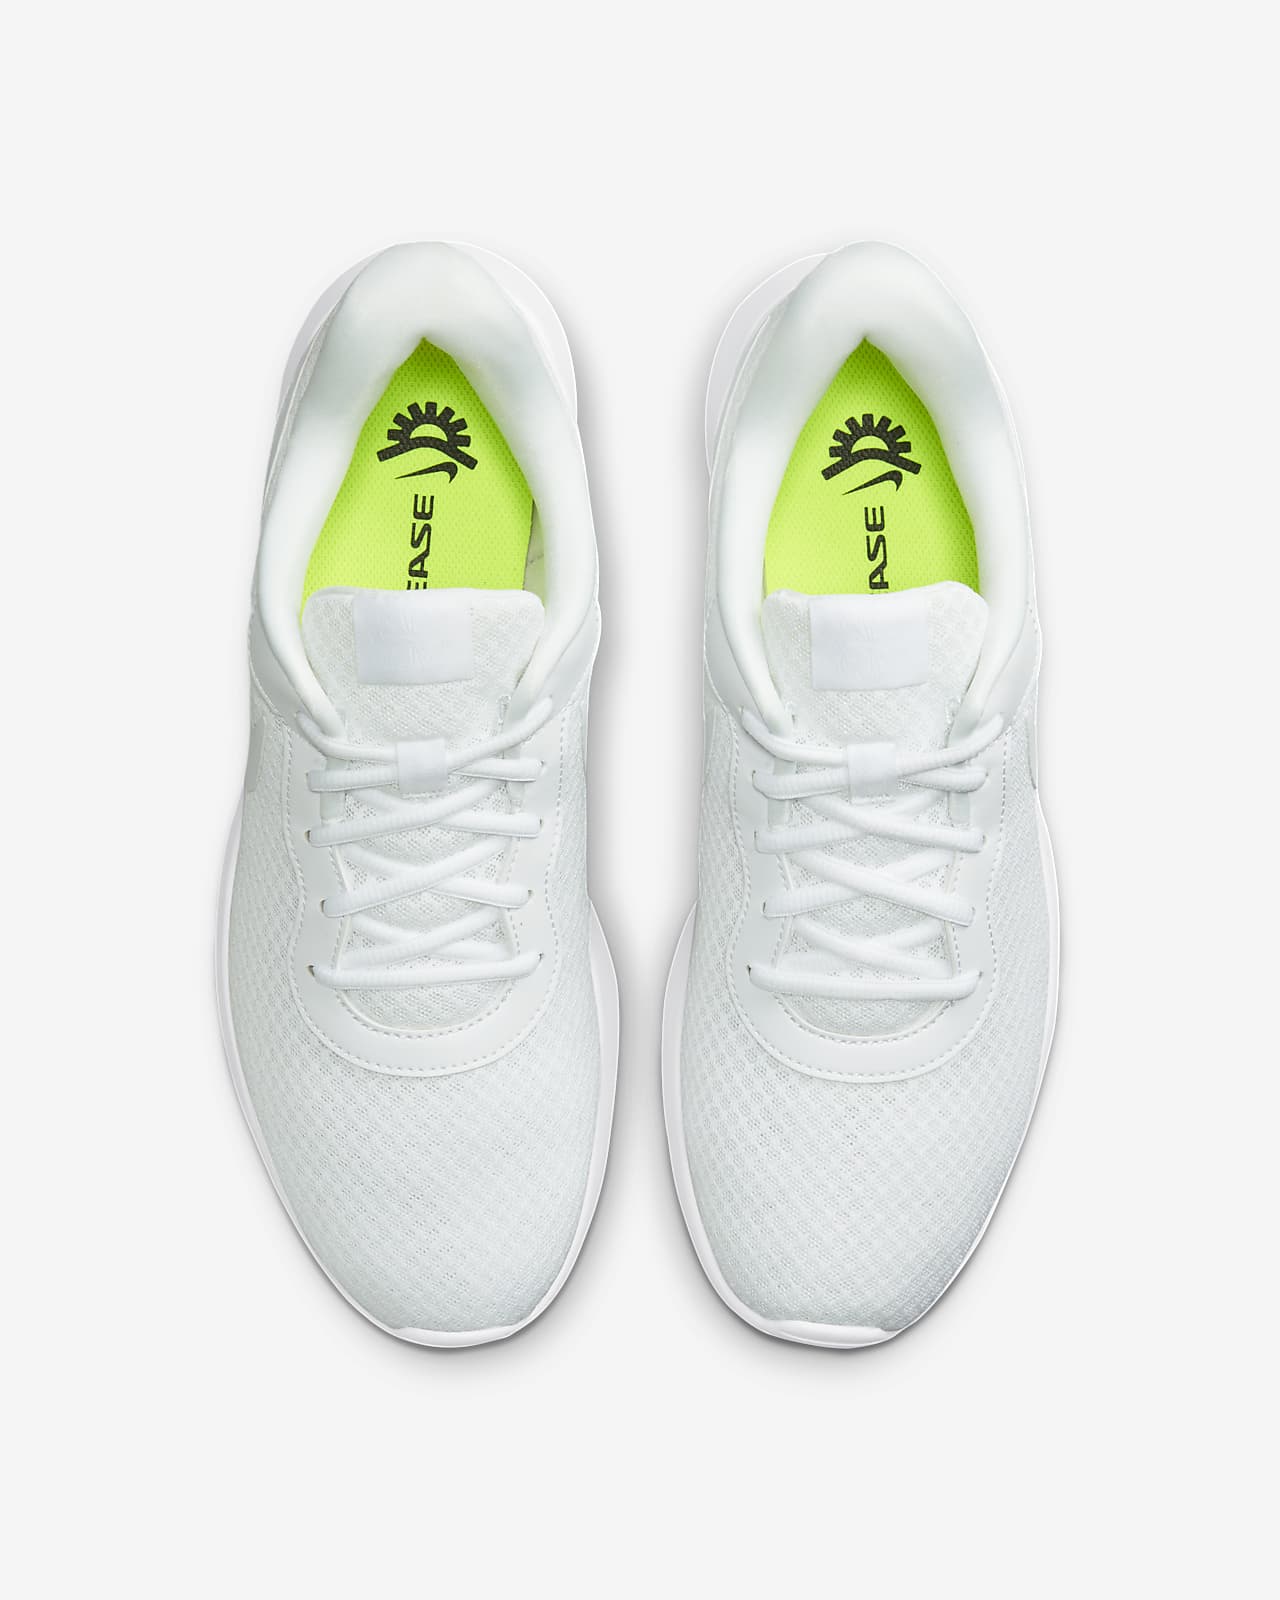 Nike Zoom Vapor Pro 2 Mens Tennis Shoe - White | Tennis-Point